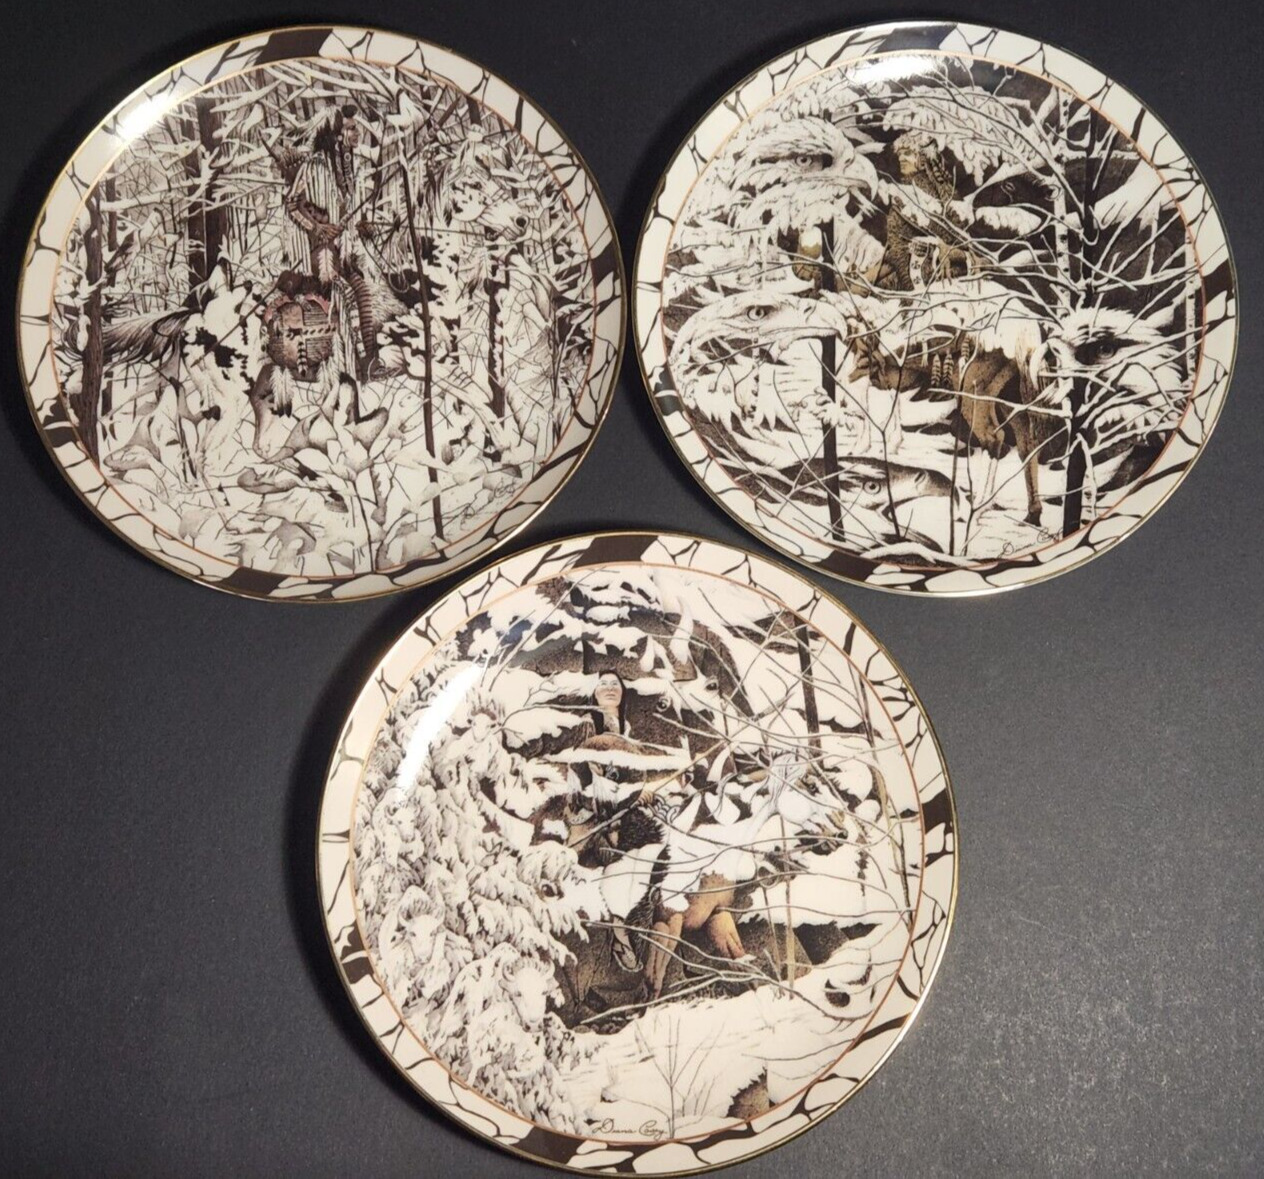 3-VTG Bradford Exchange Native American Plates Silent Journey Collection 1994